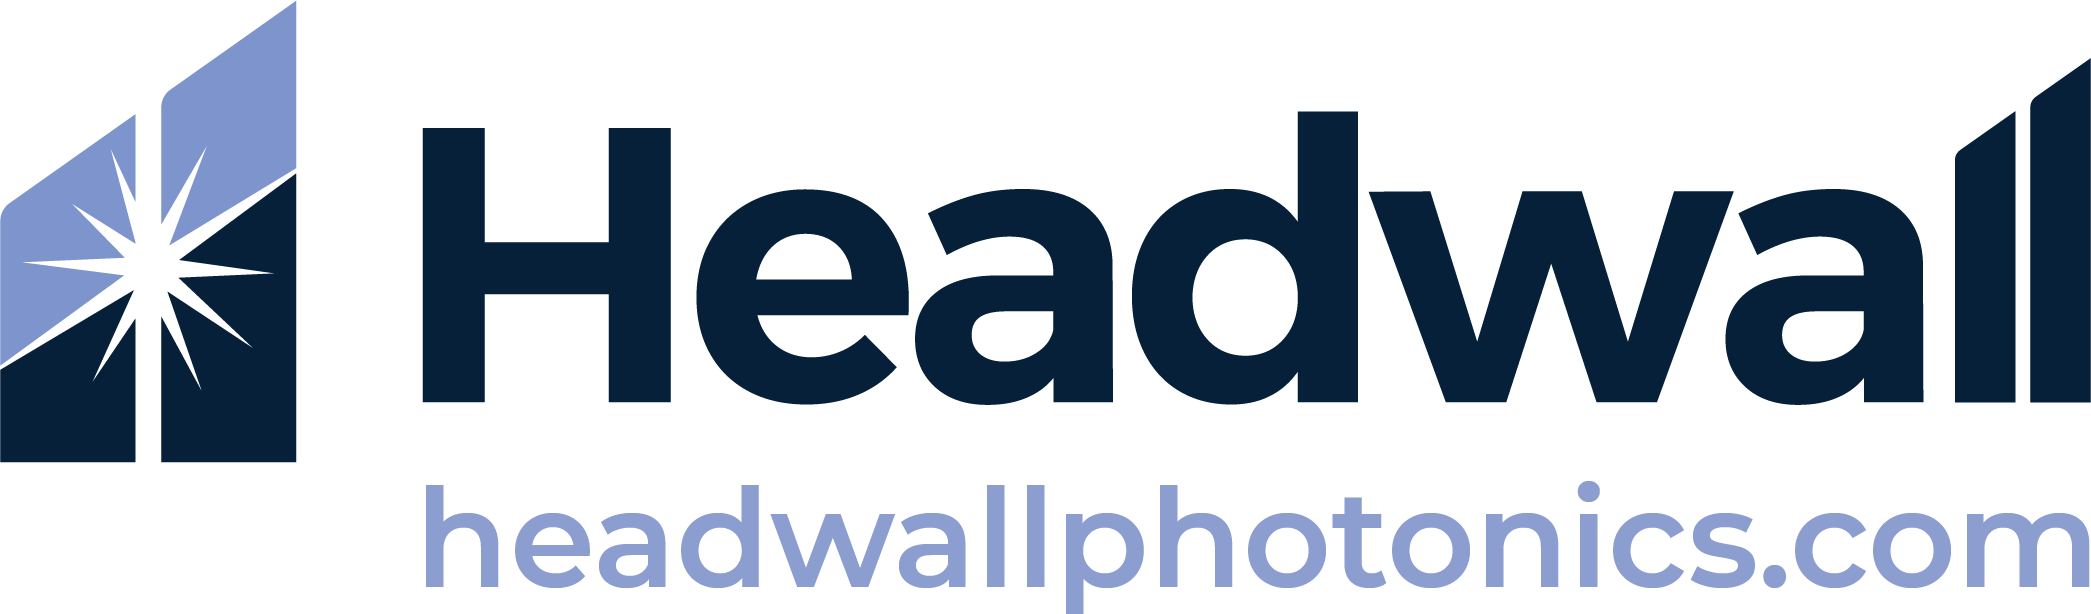 Headwall Photonics Logo with URL headwallphotonics.com